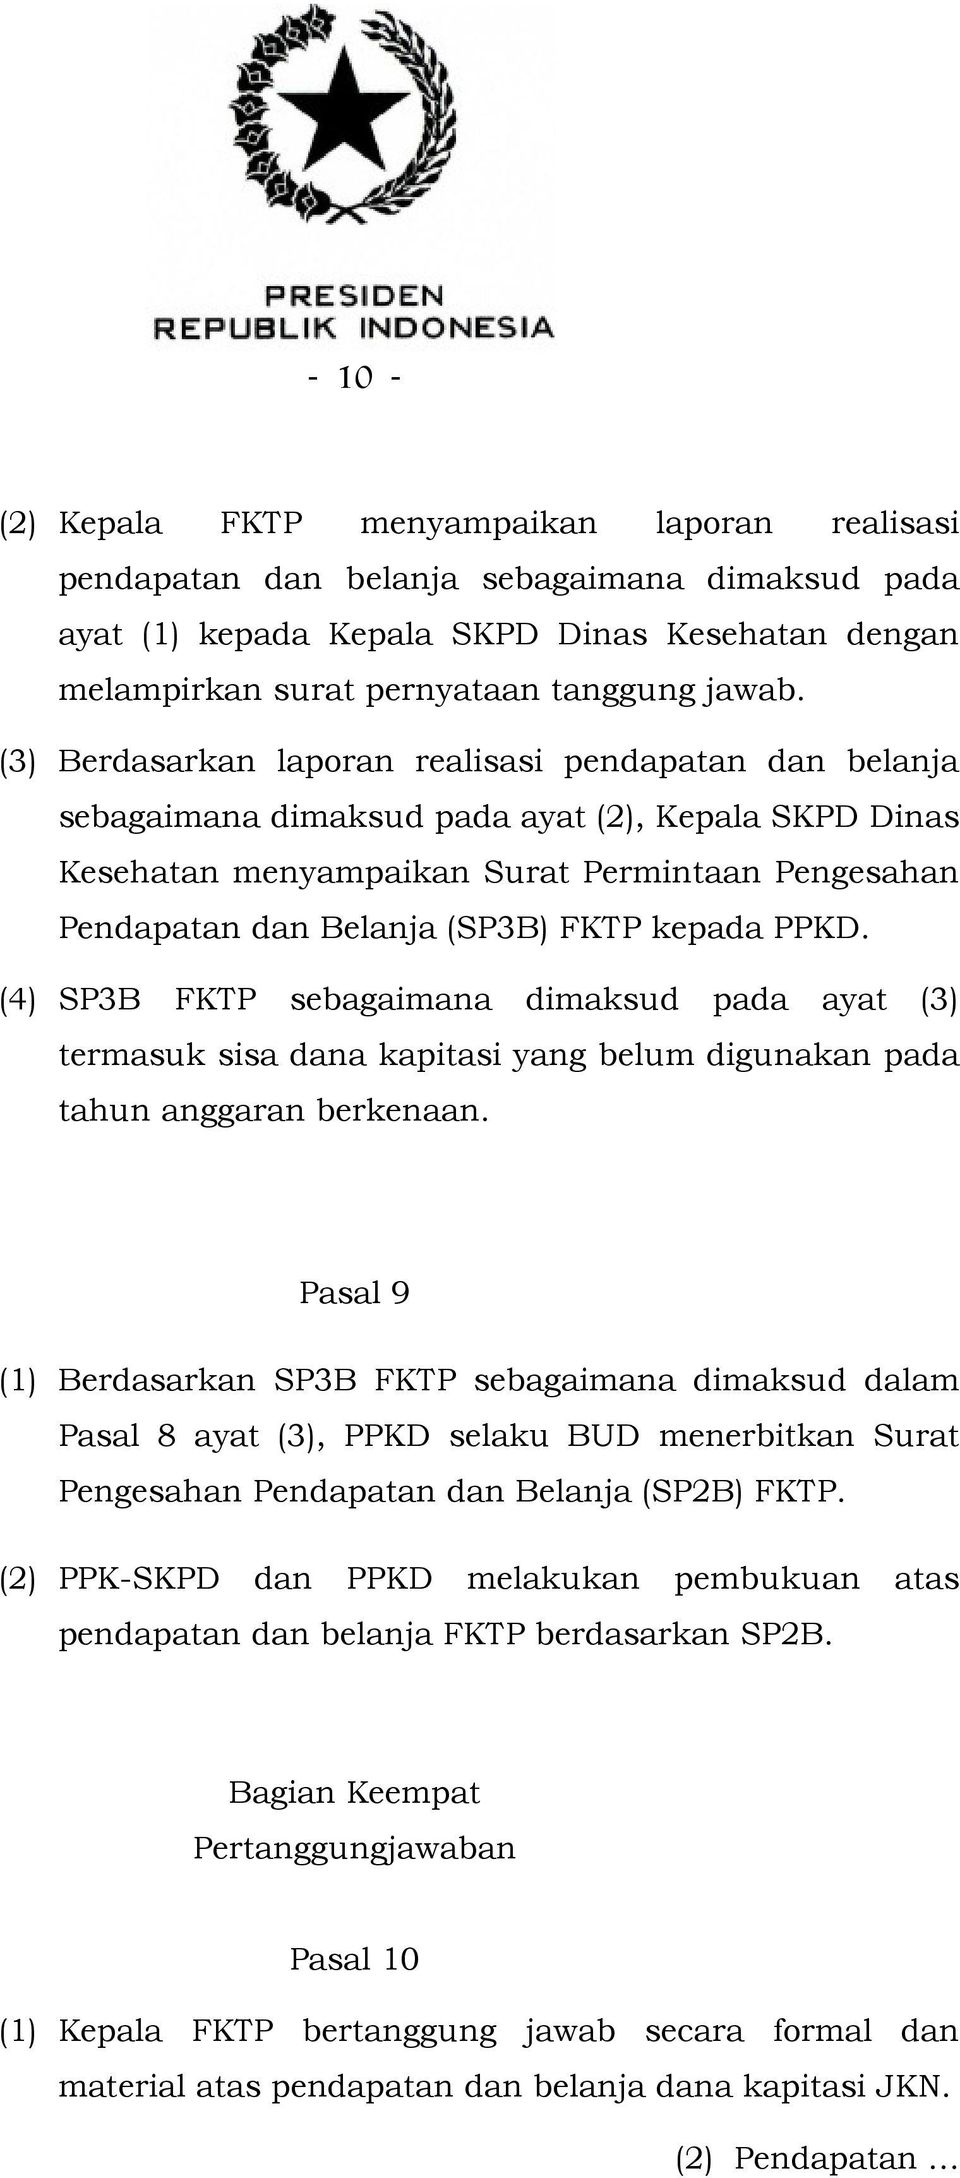 kepada PPKD. (4) SP3B FKTP sebagaimana dimaksud pada ayat (3) termasuk sisa dana kapitasi yang belum digunakan pada tahun anggaran berkenaan.